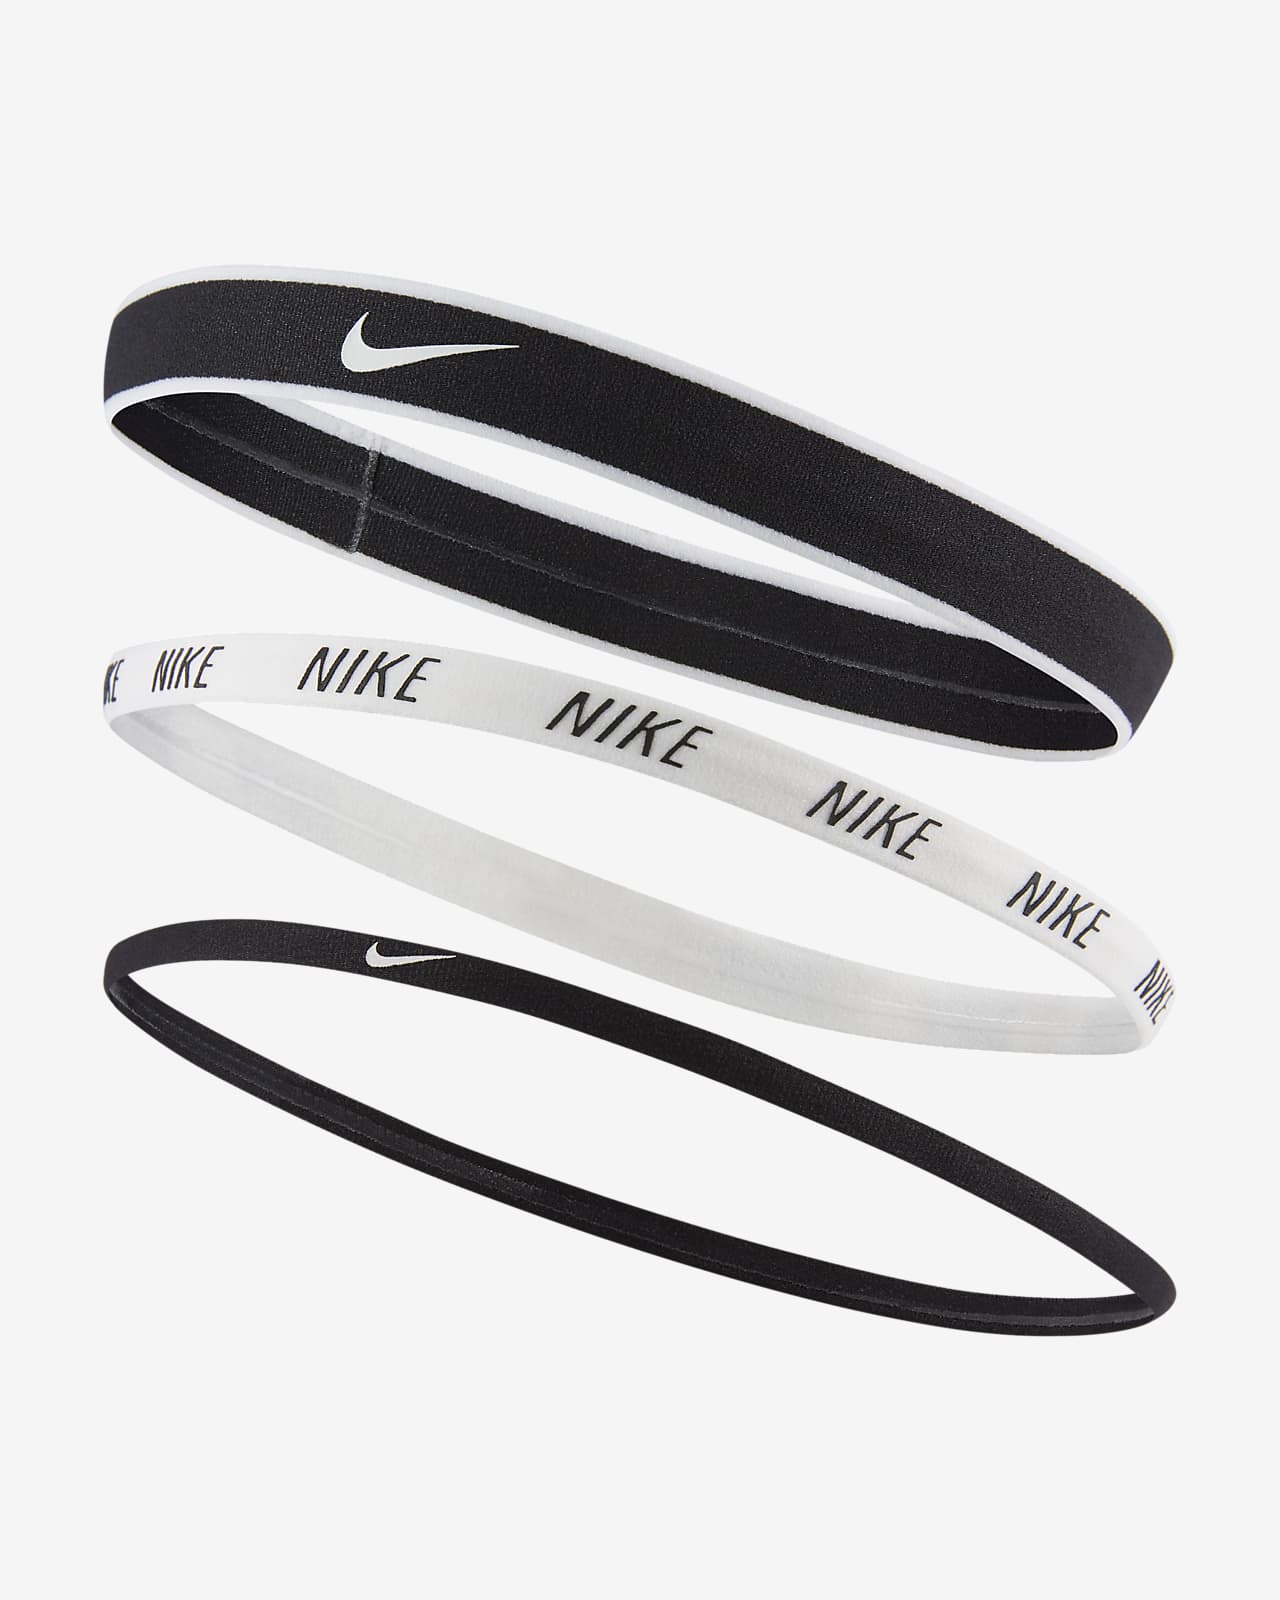 nike accessories elastic hairbands 3 pack